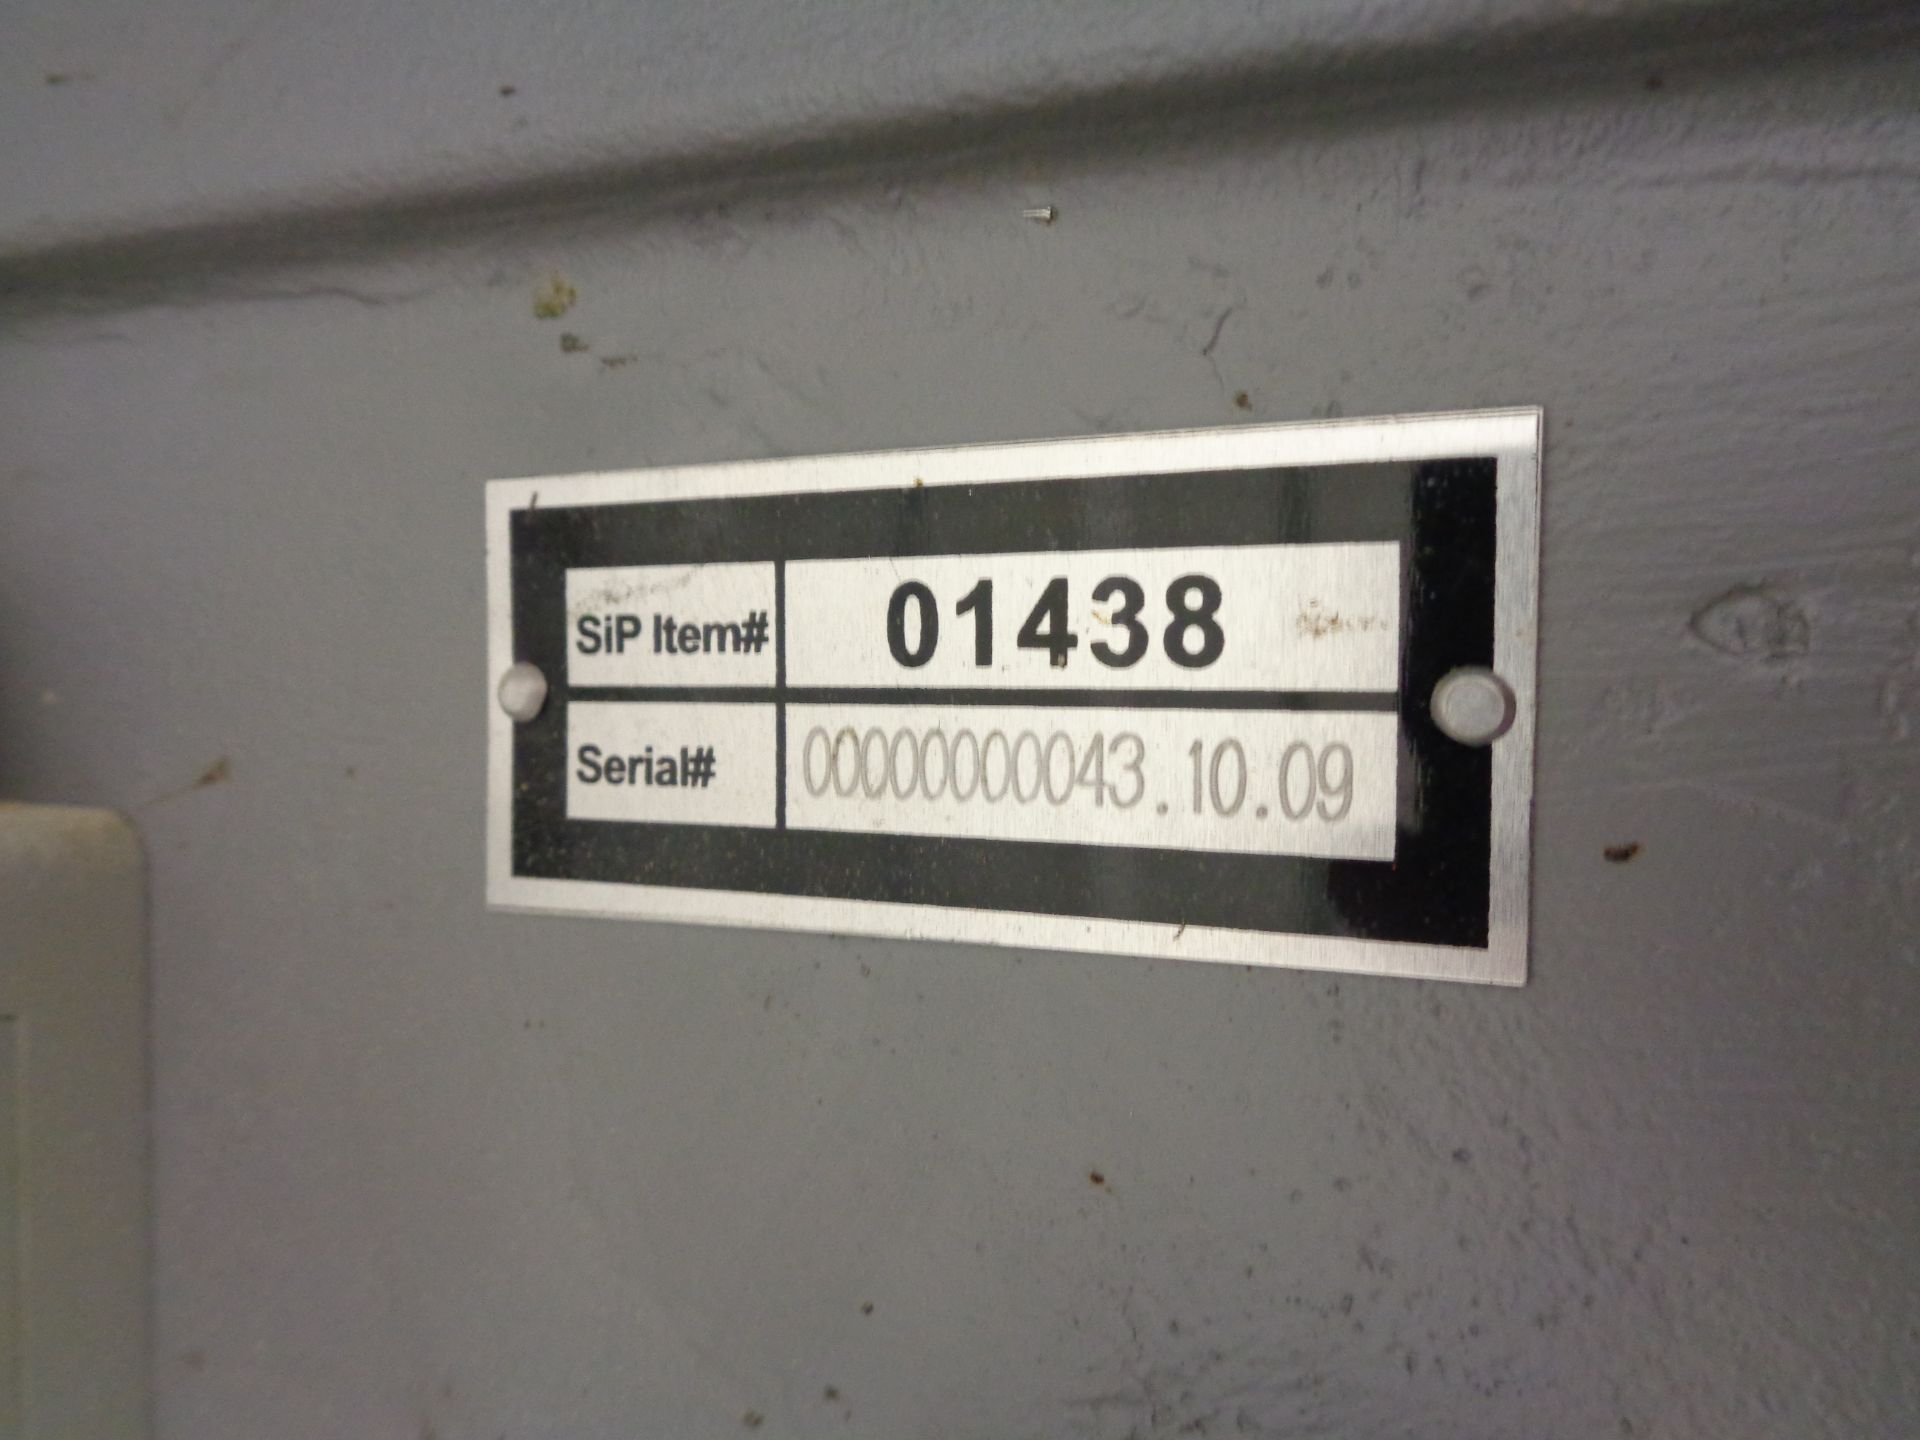 Sip 01438 32mm drill press, serial no. 43.10.09 - Bild 3 aus 4